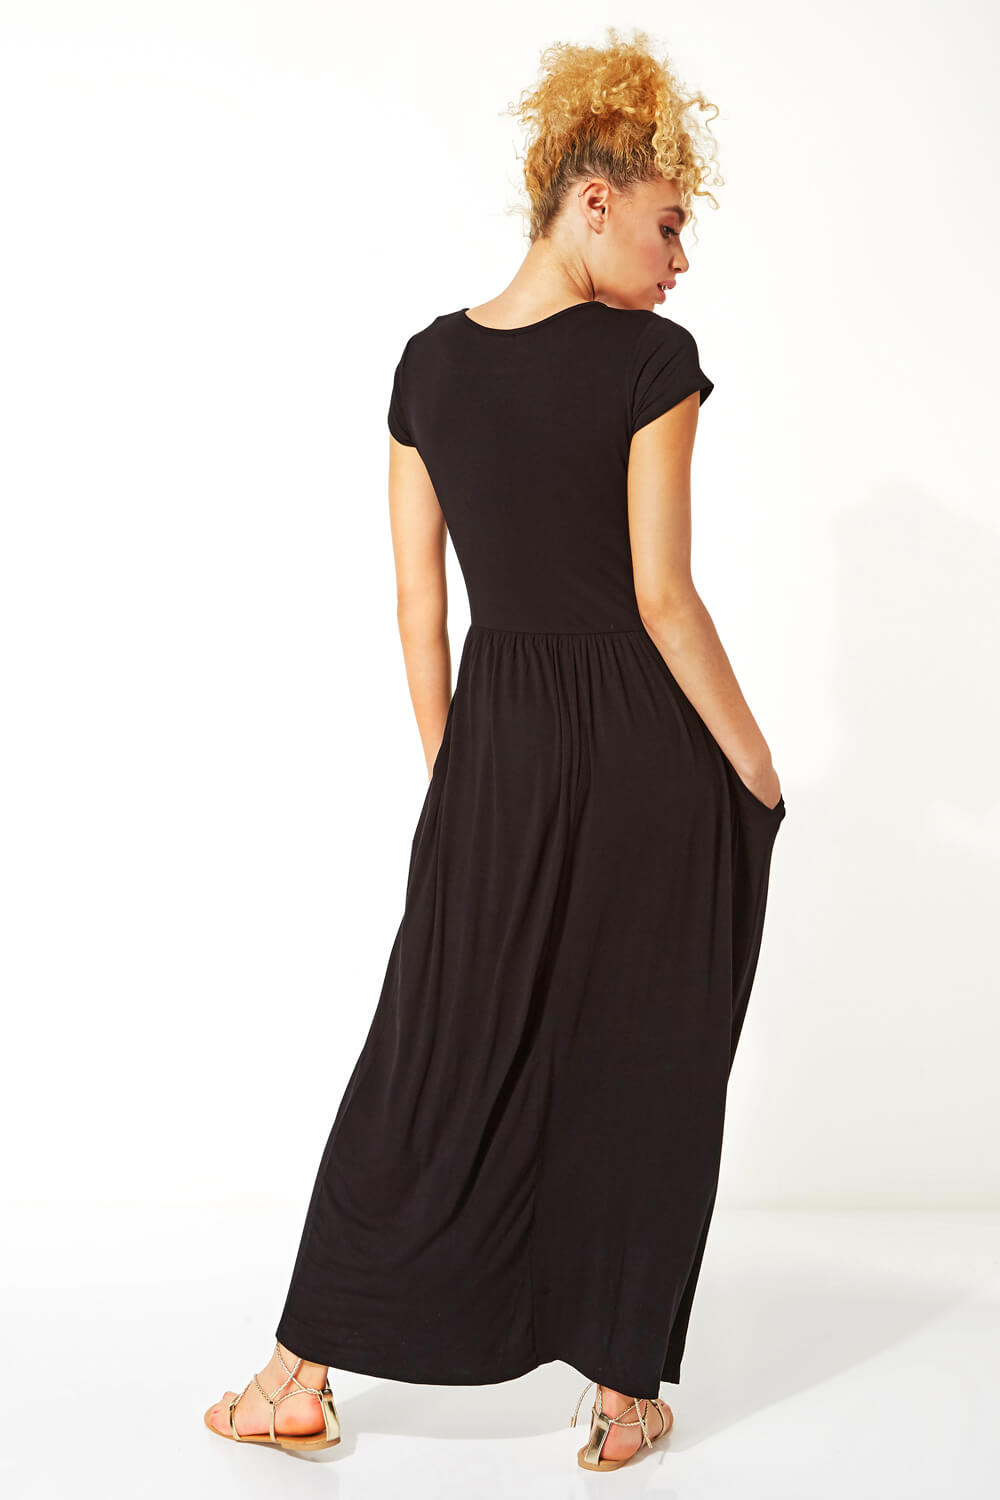 Gathered Skirt Maxi Dress in Black - Roman Originals UK